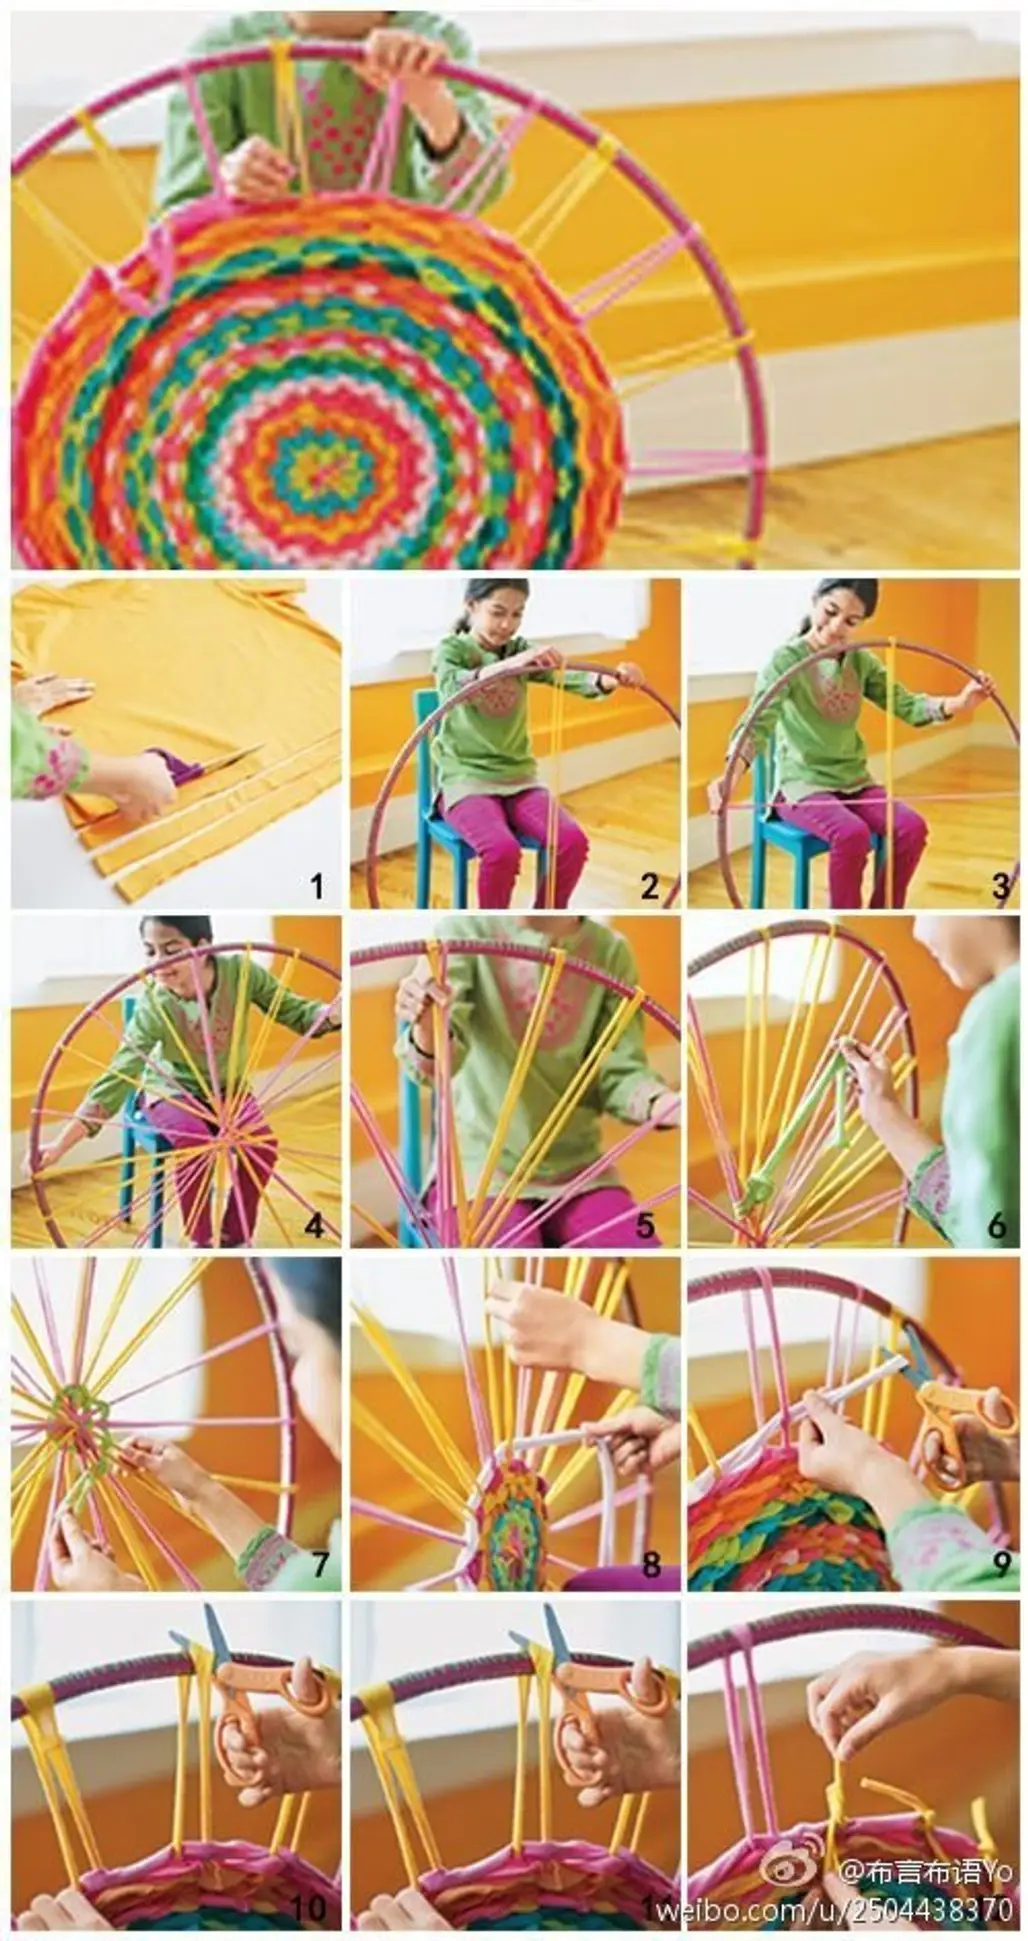 Weaving with a Hula Hoop